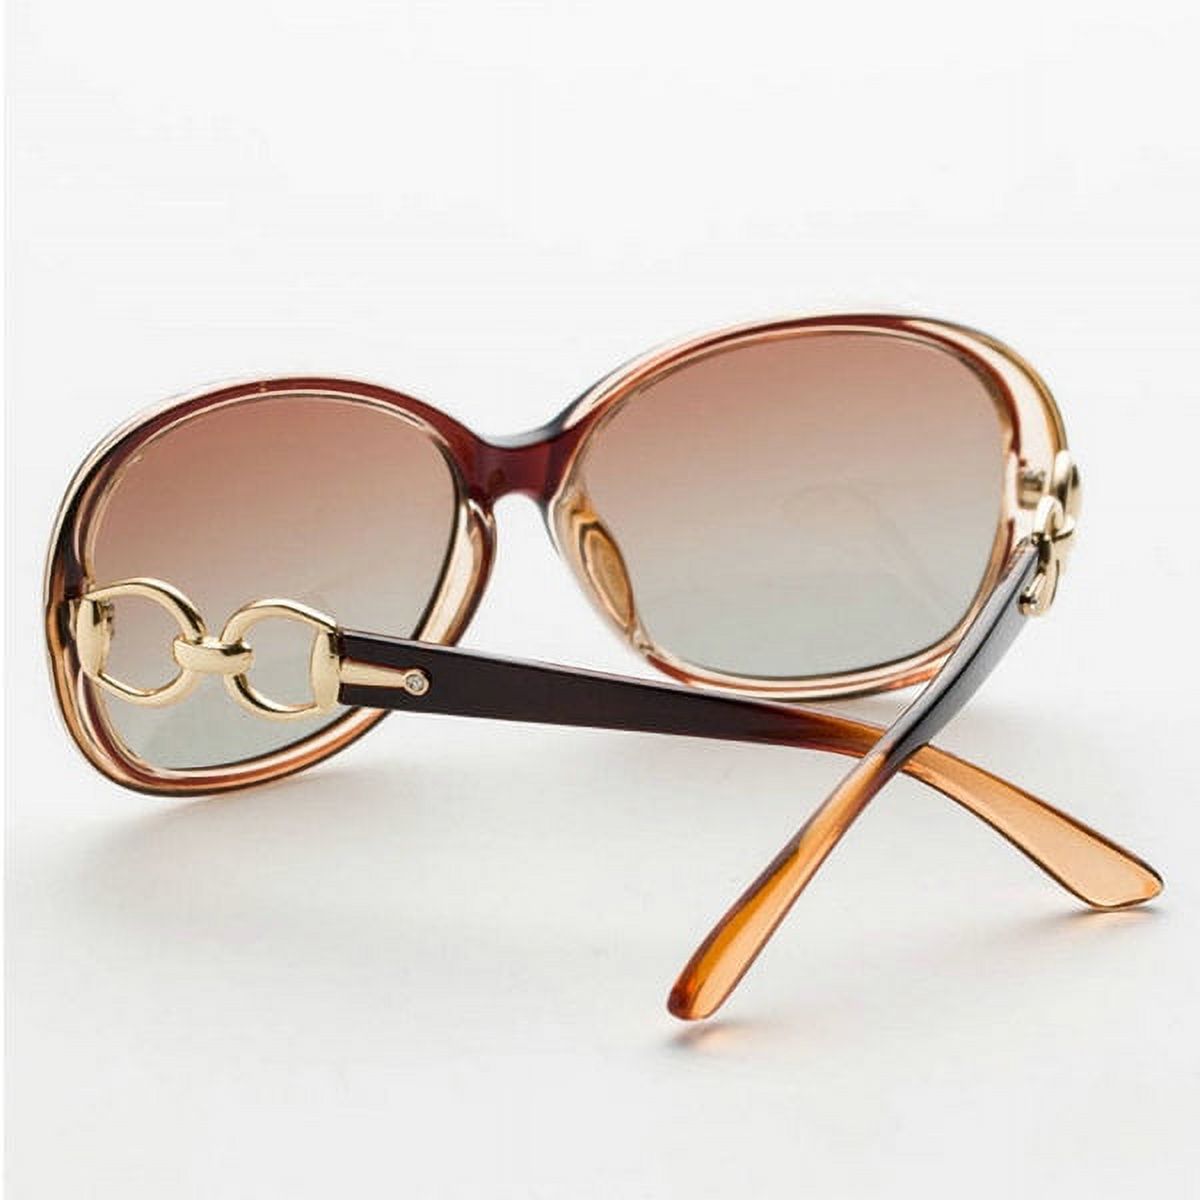 Womens Sunglasses Fashion Sun Glasses UV Protection Sunglasses - image 4 of 5